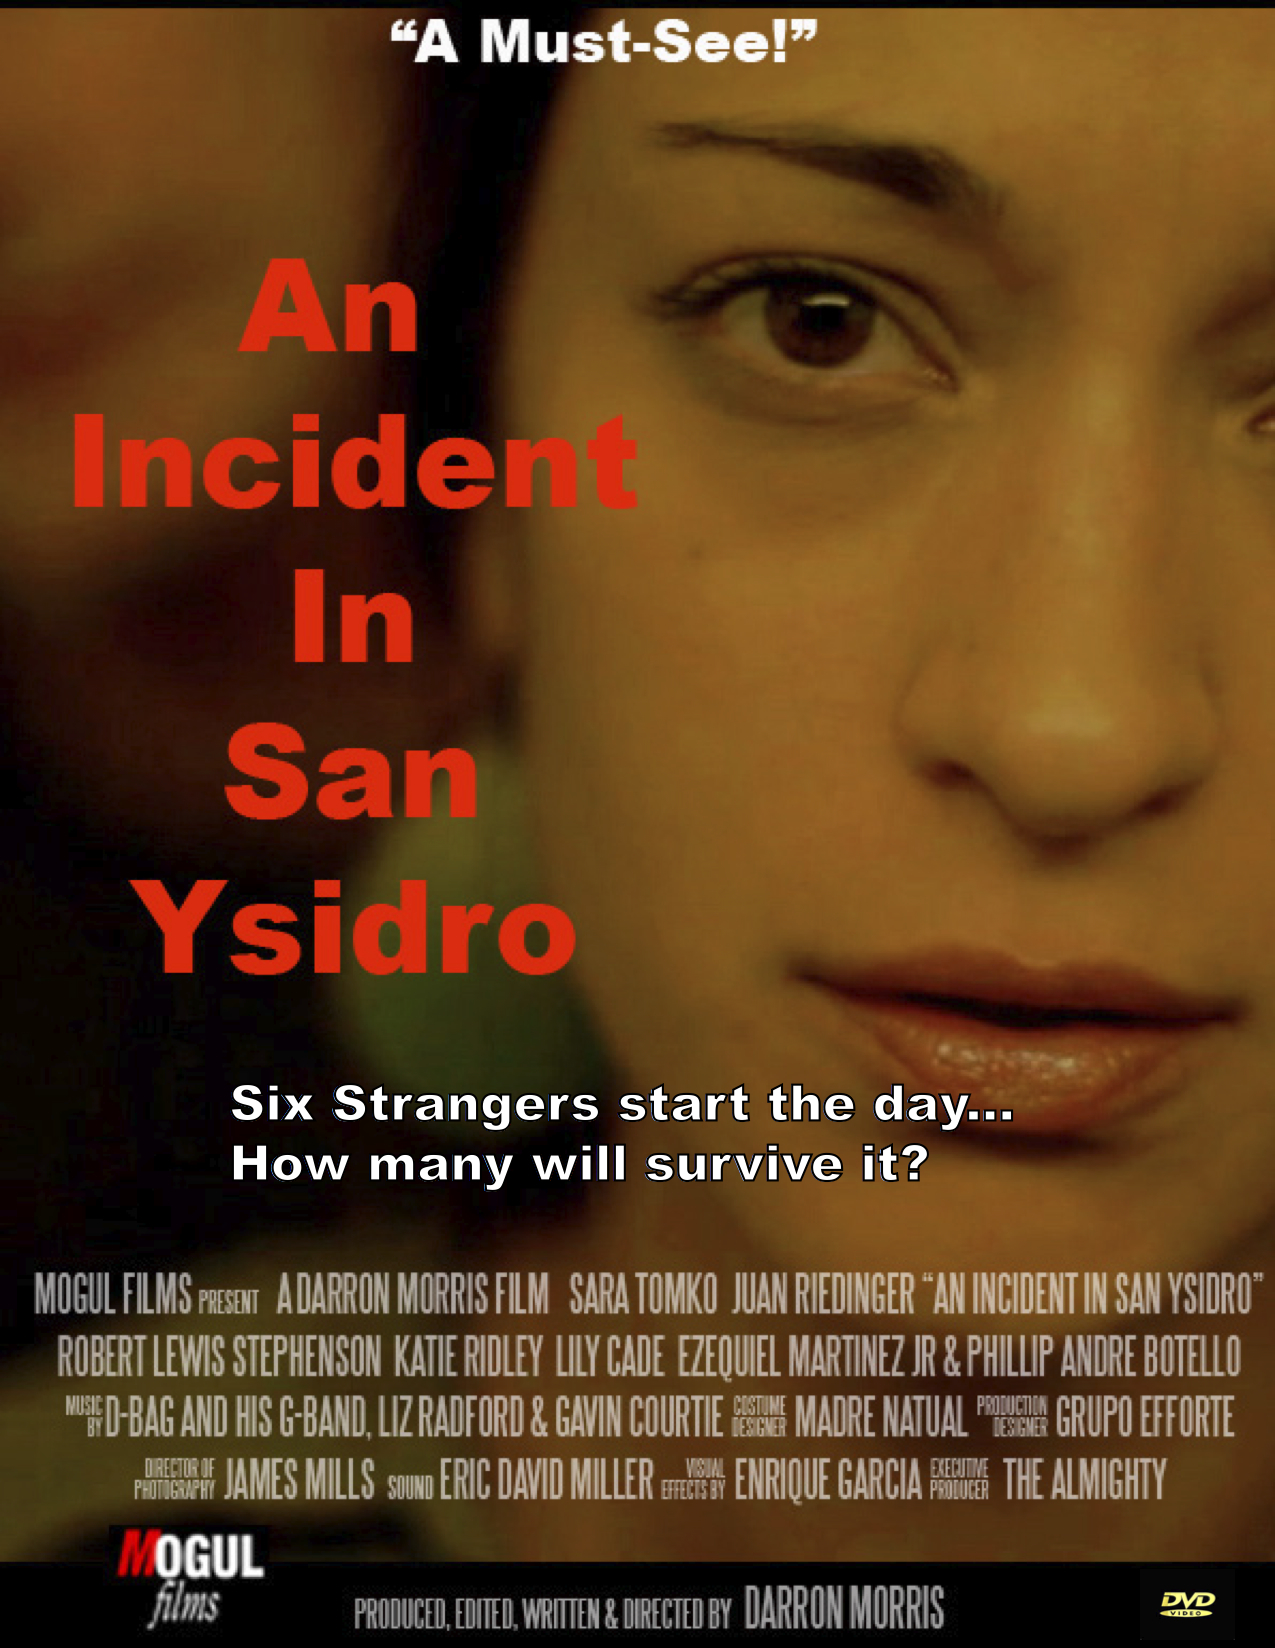 Mogul Films' An Incident In San Ysidro